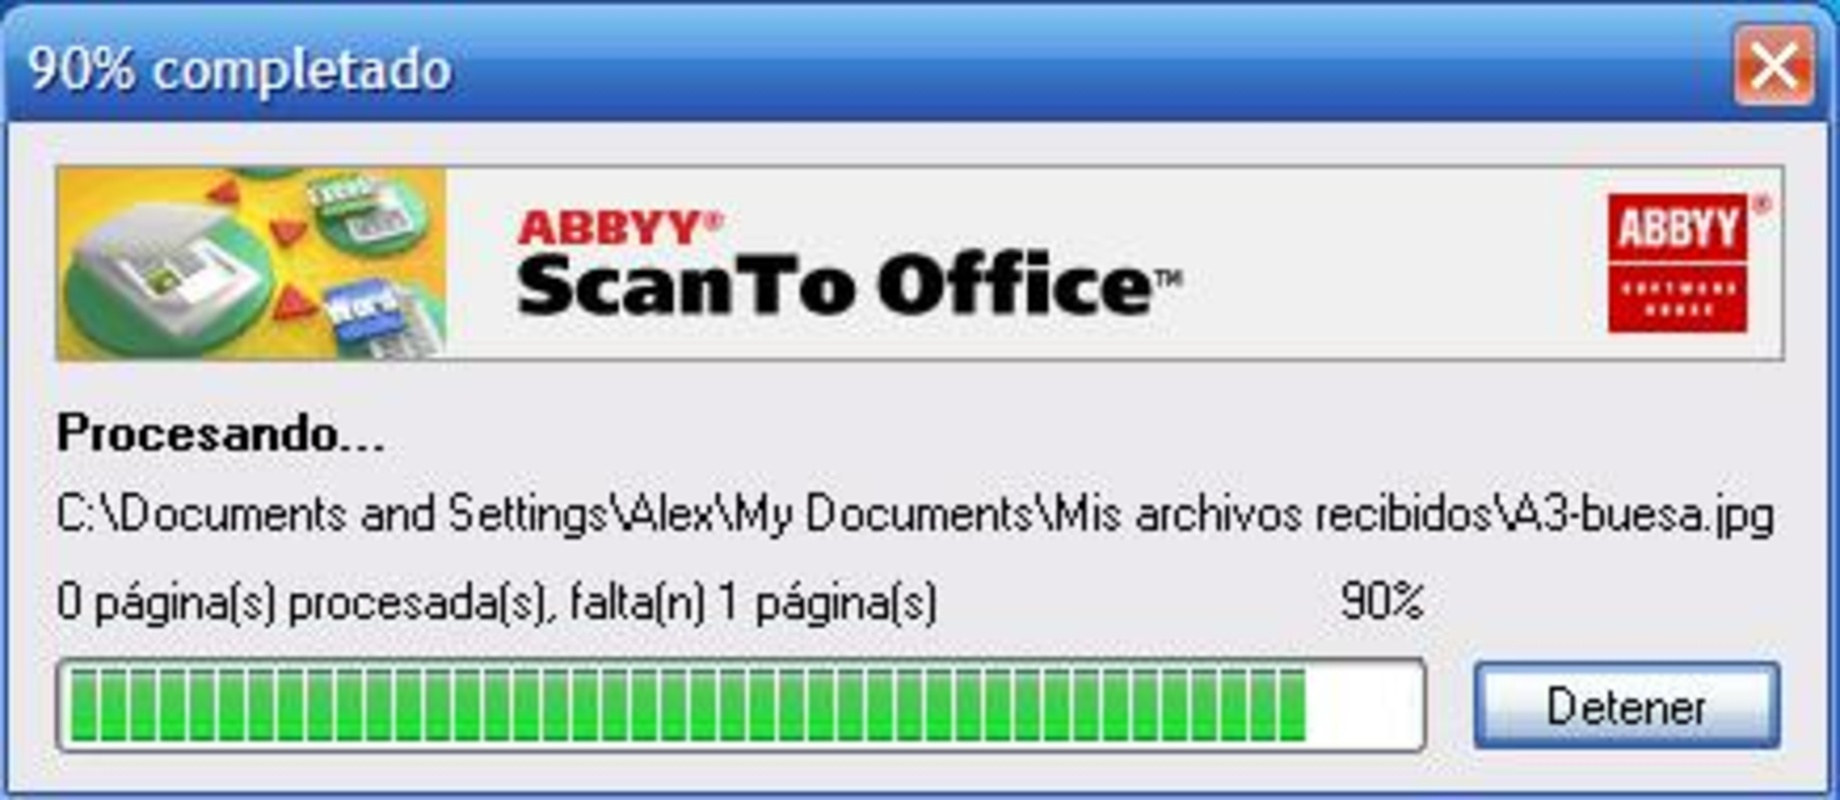 ABBYY ScanTo Office 1.0 for Windows Screenshot 1